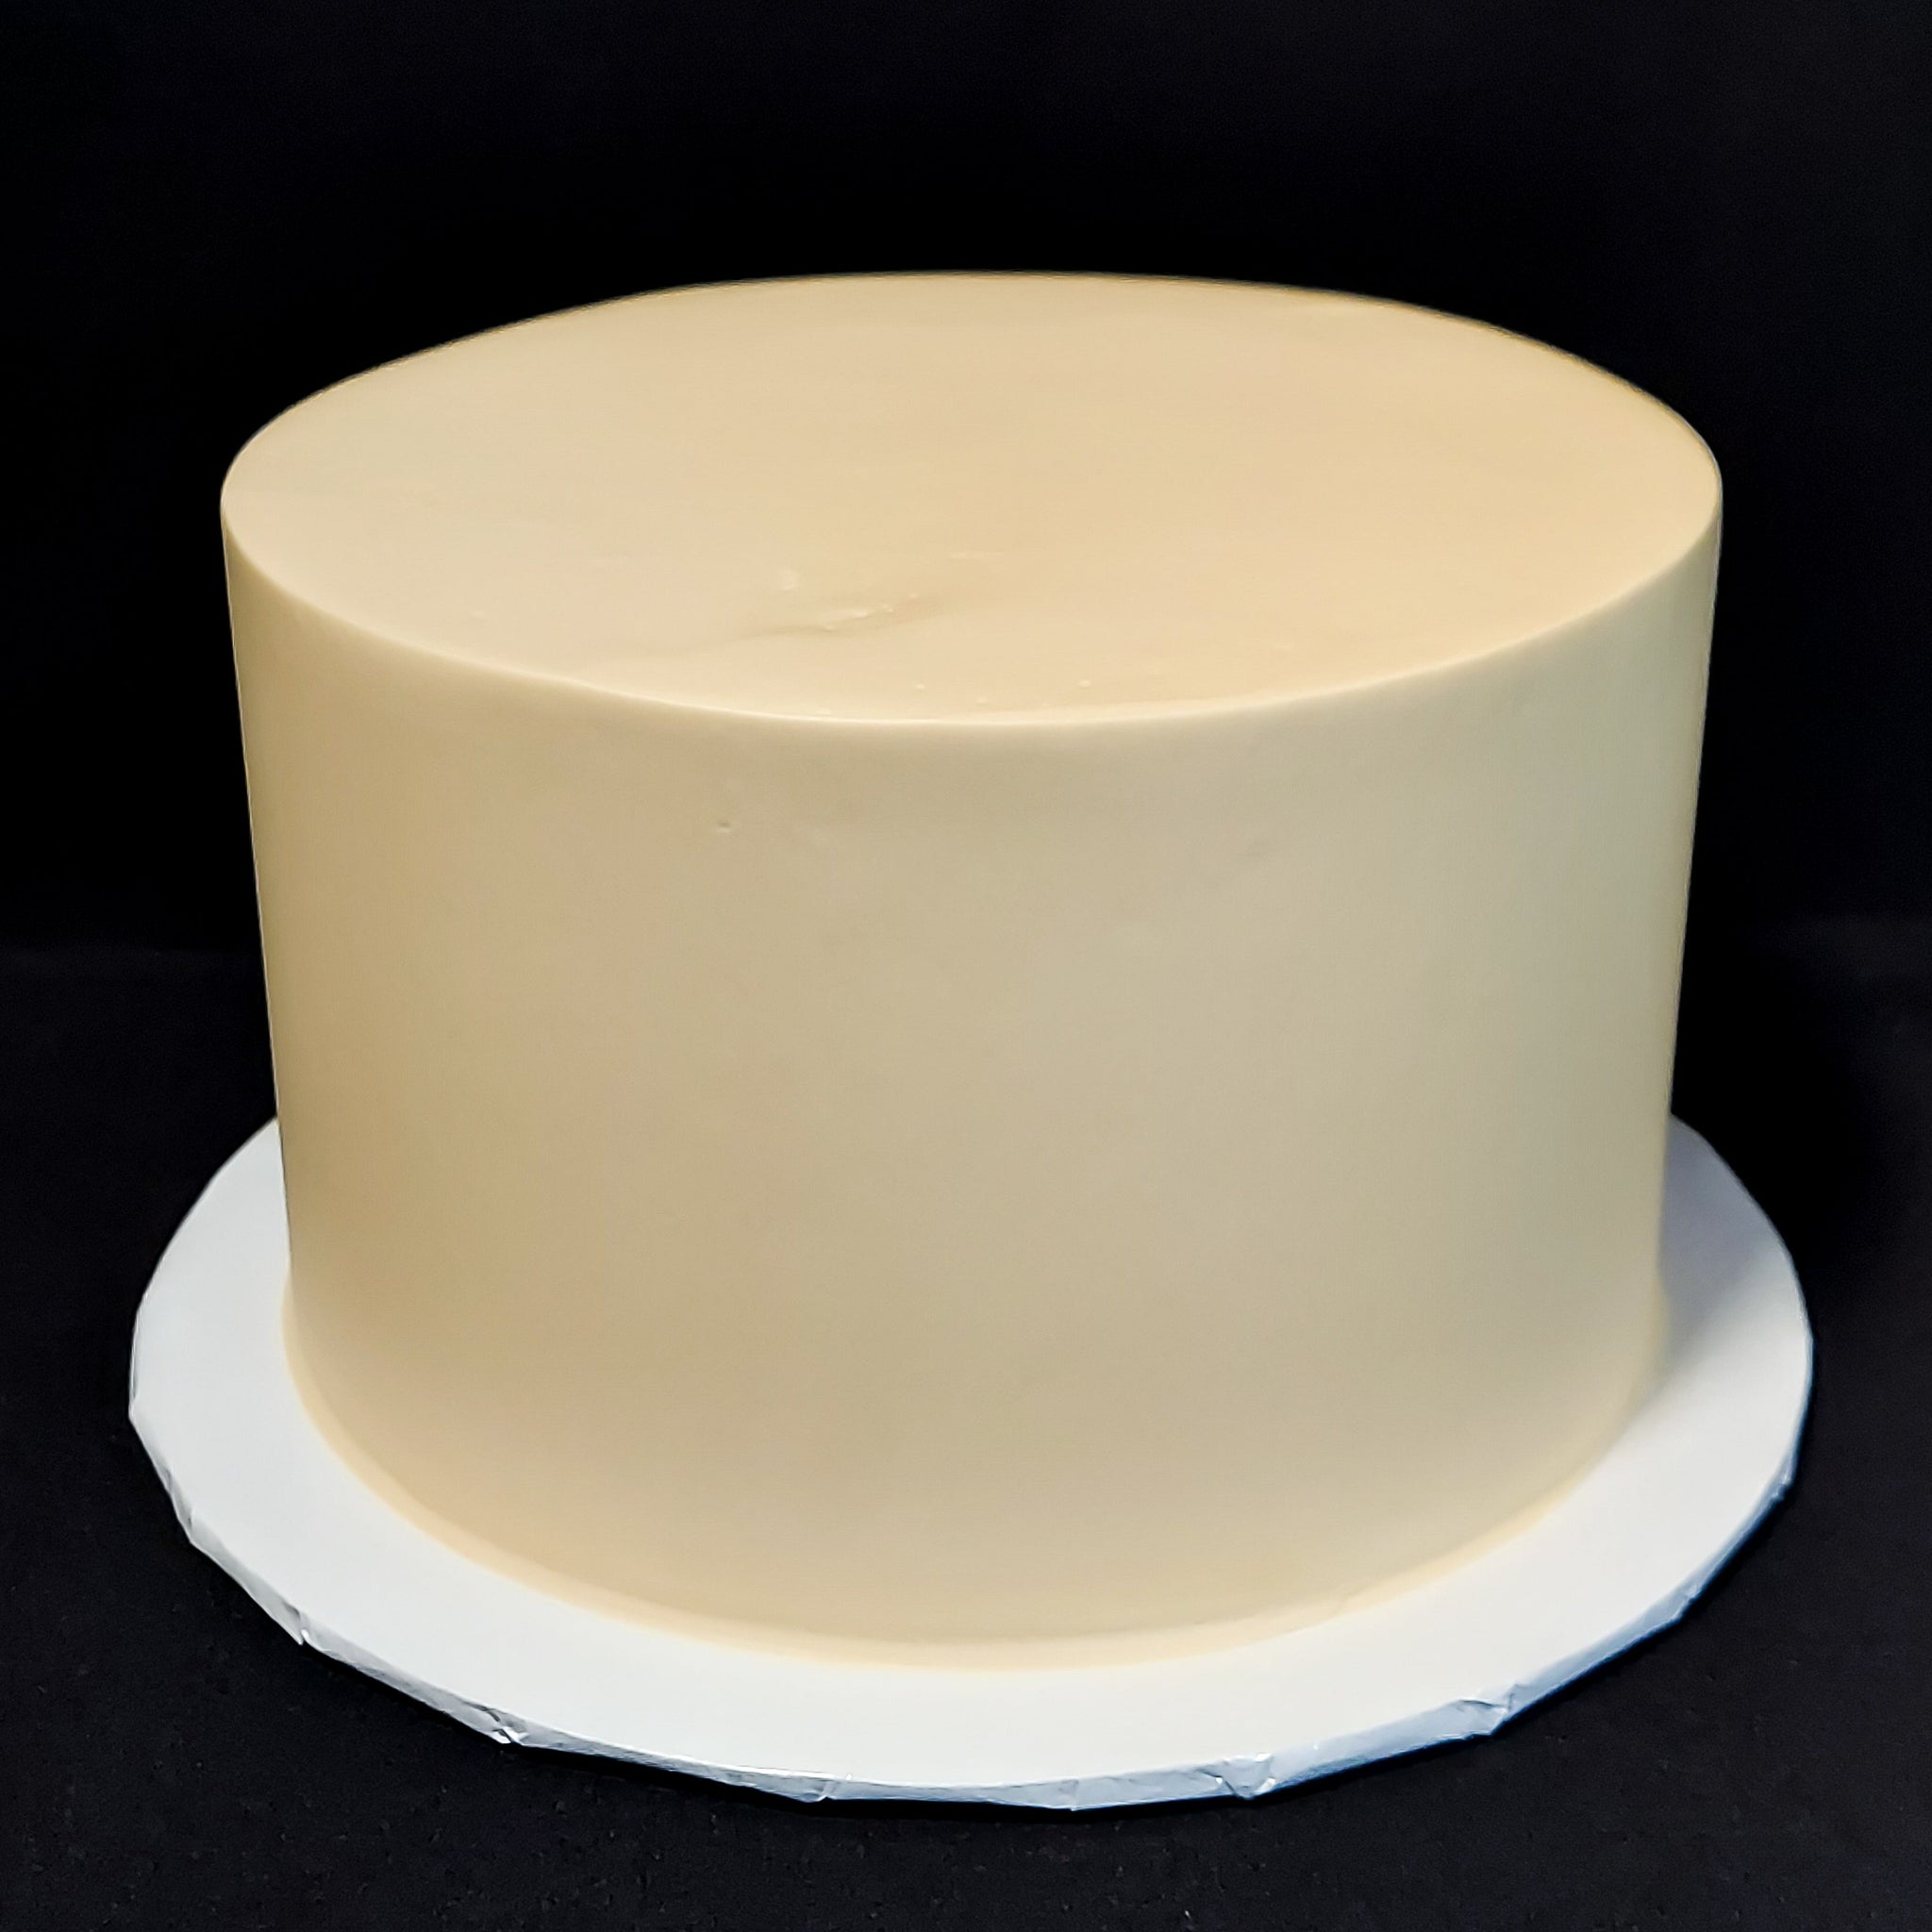 Three Tier Wedding Cakes – The Baking Hive